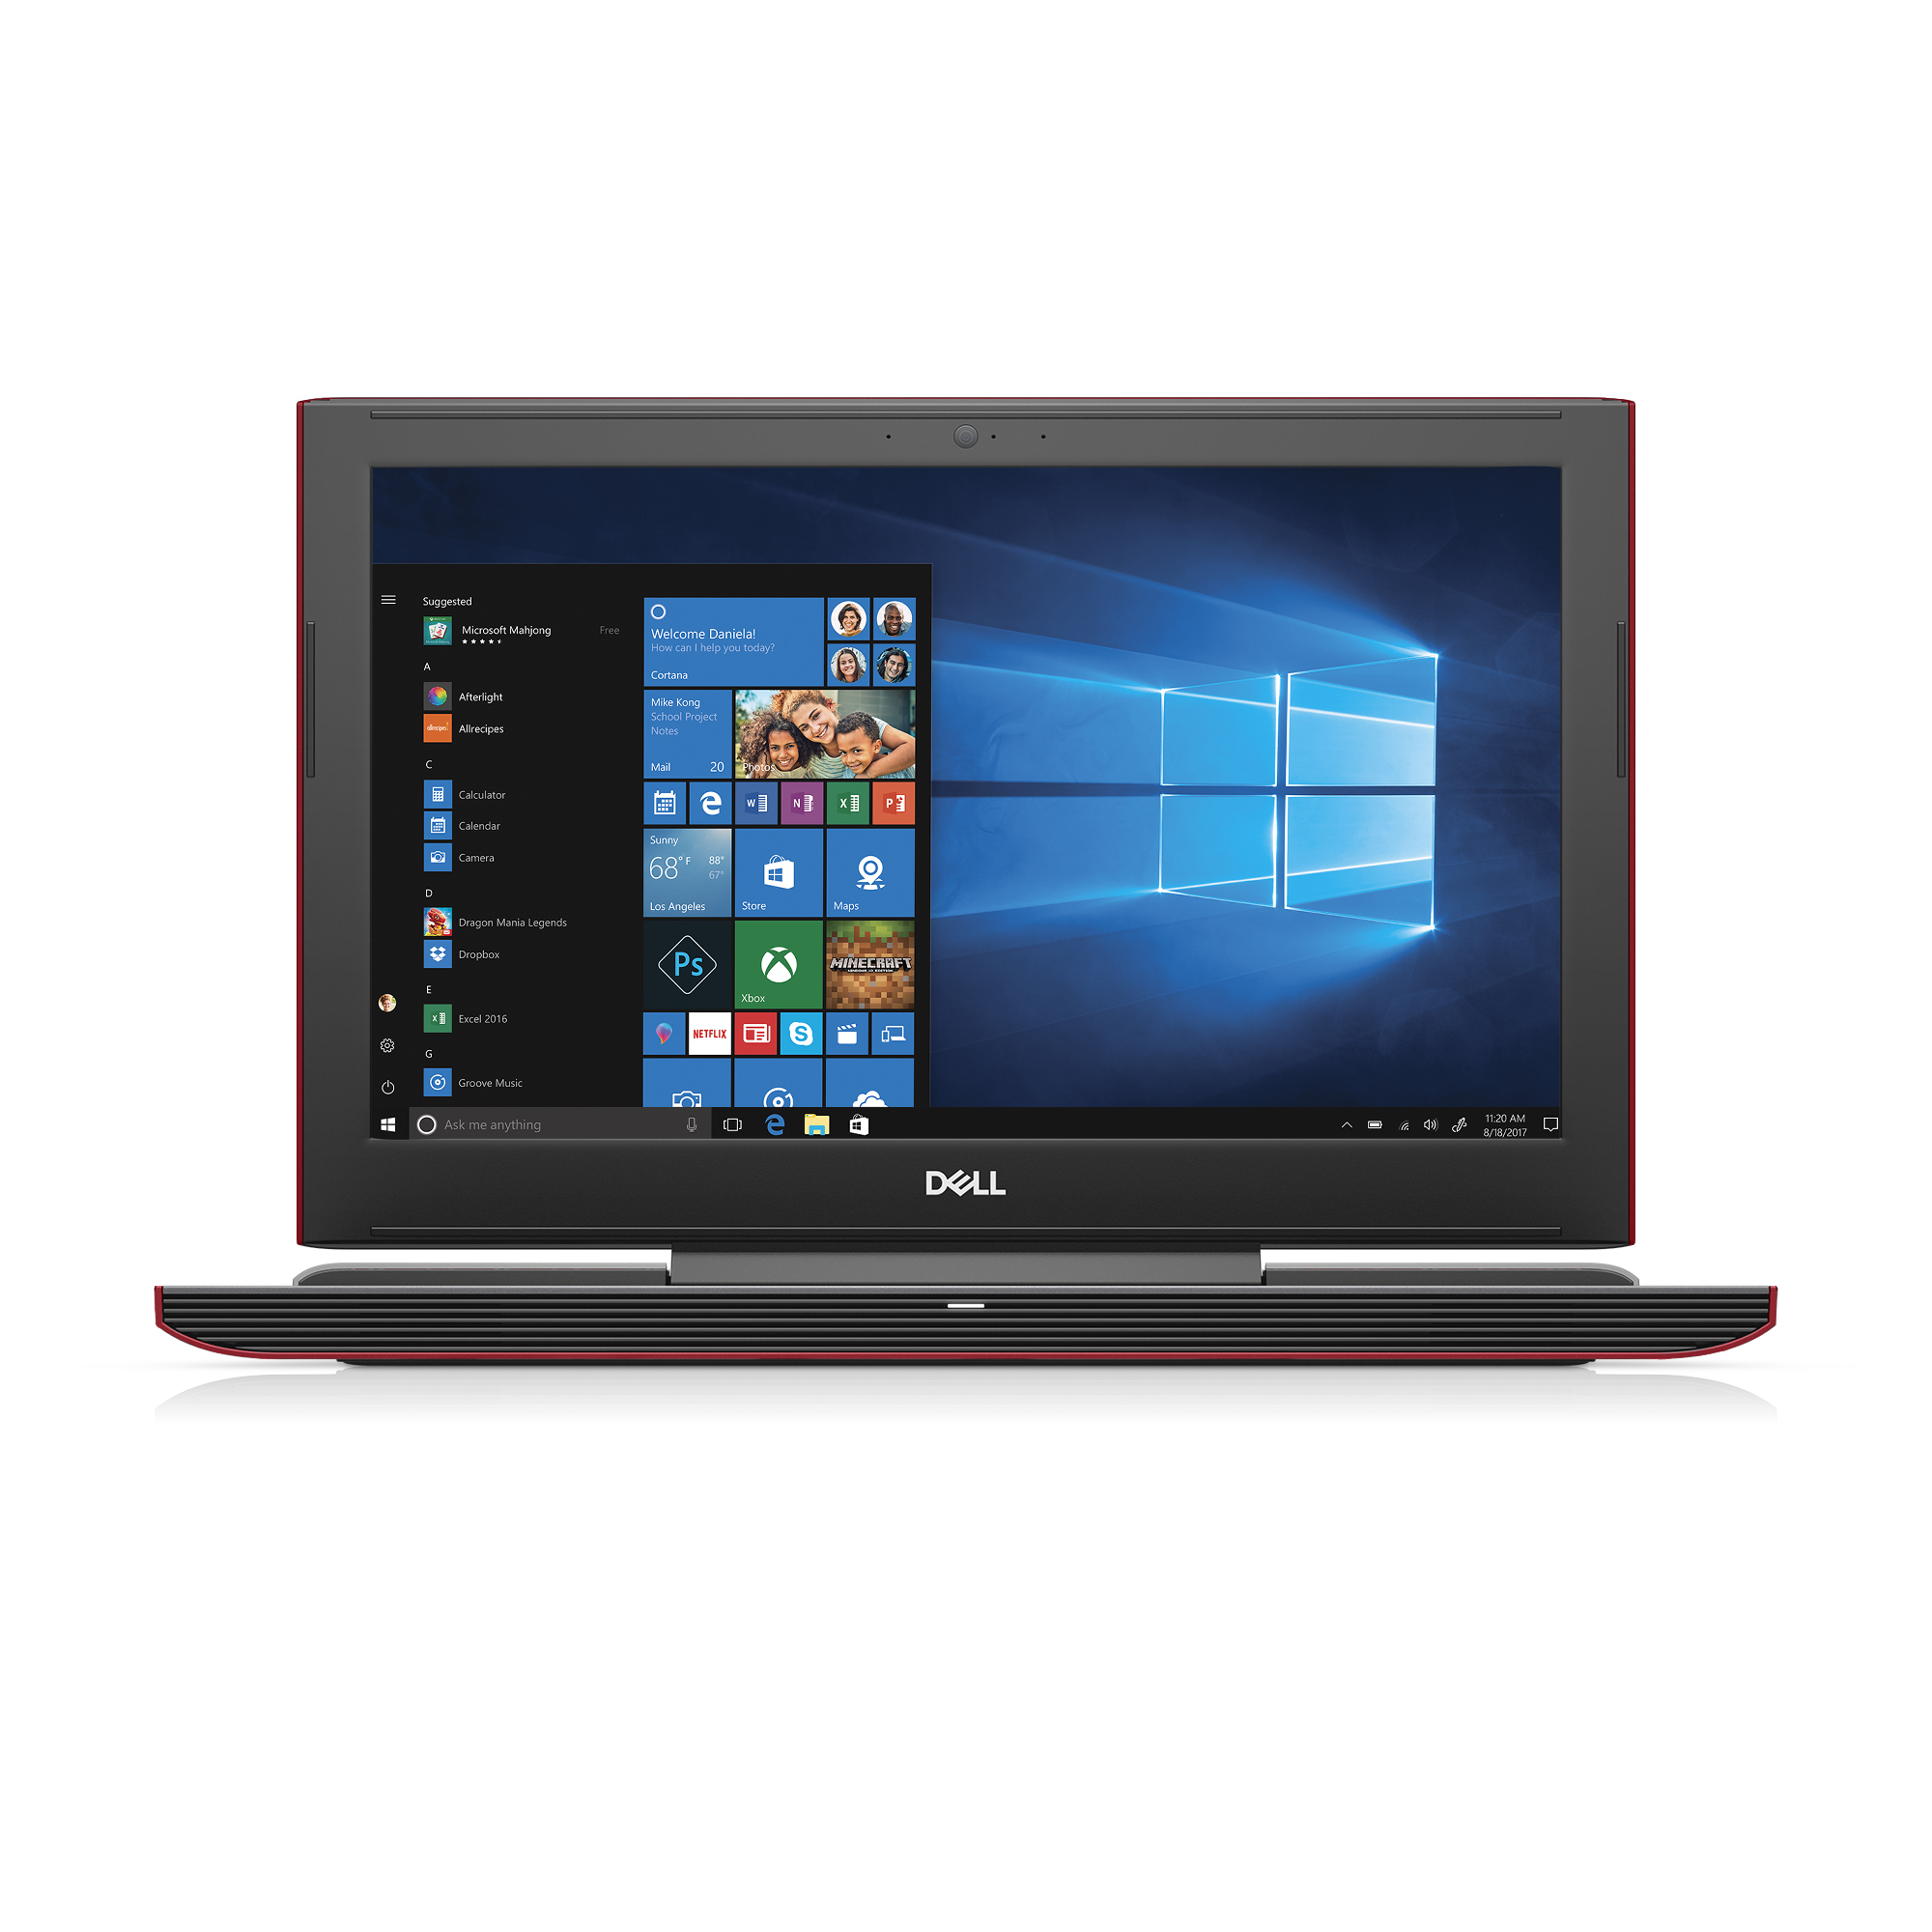 Dell G5 Gaming Laptop 15.6" Full HD, Intel Core i7-8750H, NVIDIA GeForce GTX 1050 Ti 4GB, 1TB HDD + 128GB SSD Storage, 8GB RAM, G5587-7037RED-PUS - image 4 of 6